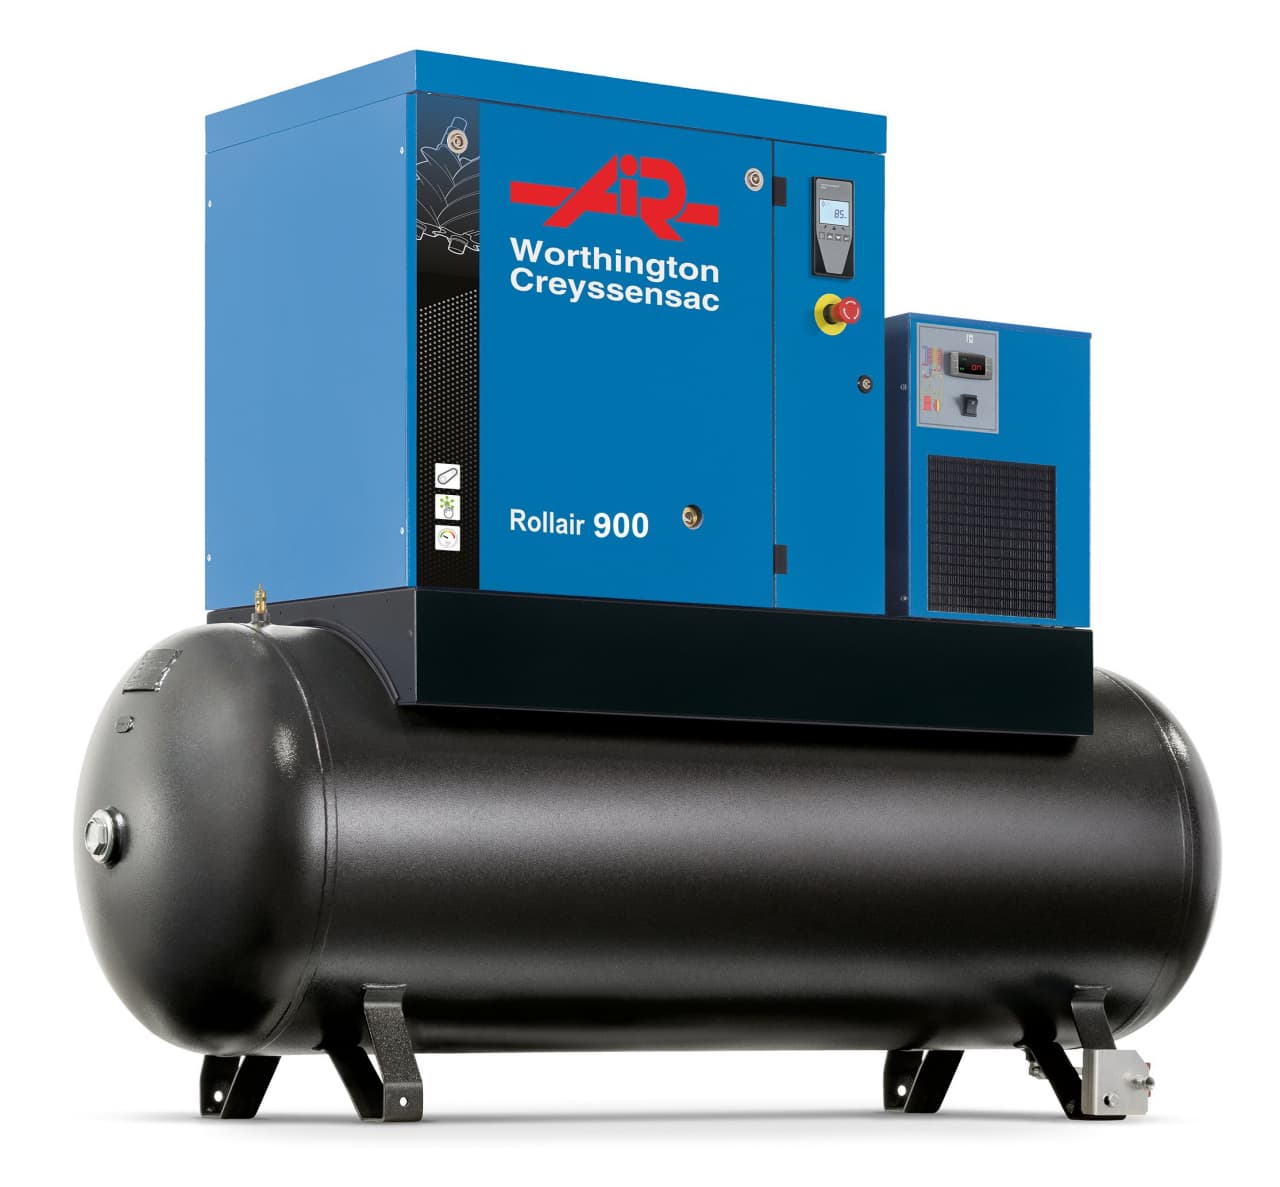 Compressore d'aria Silenziatore 6L 8 bar 0,7 HP 500W VITO